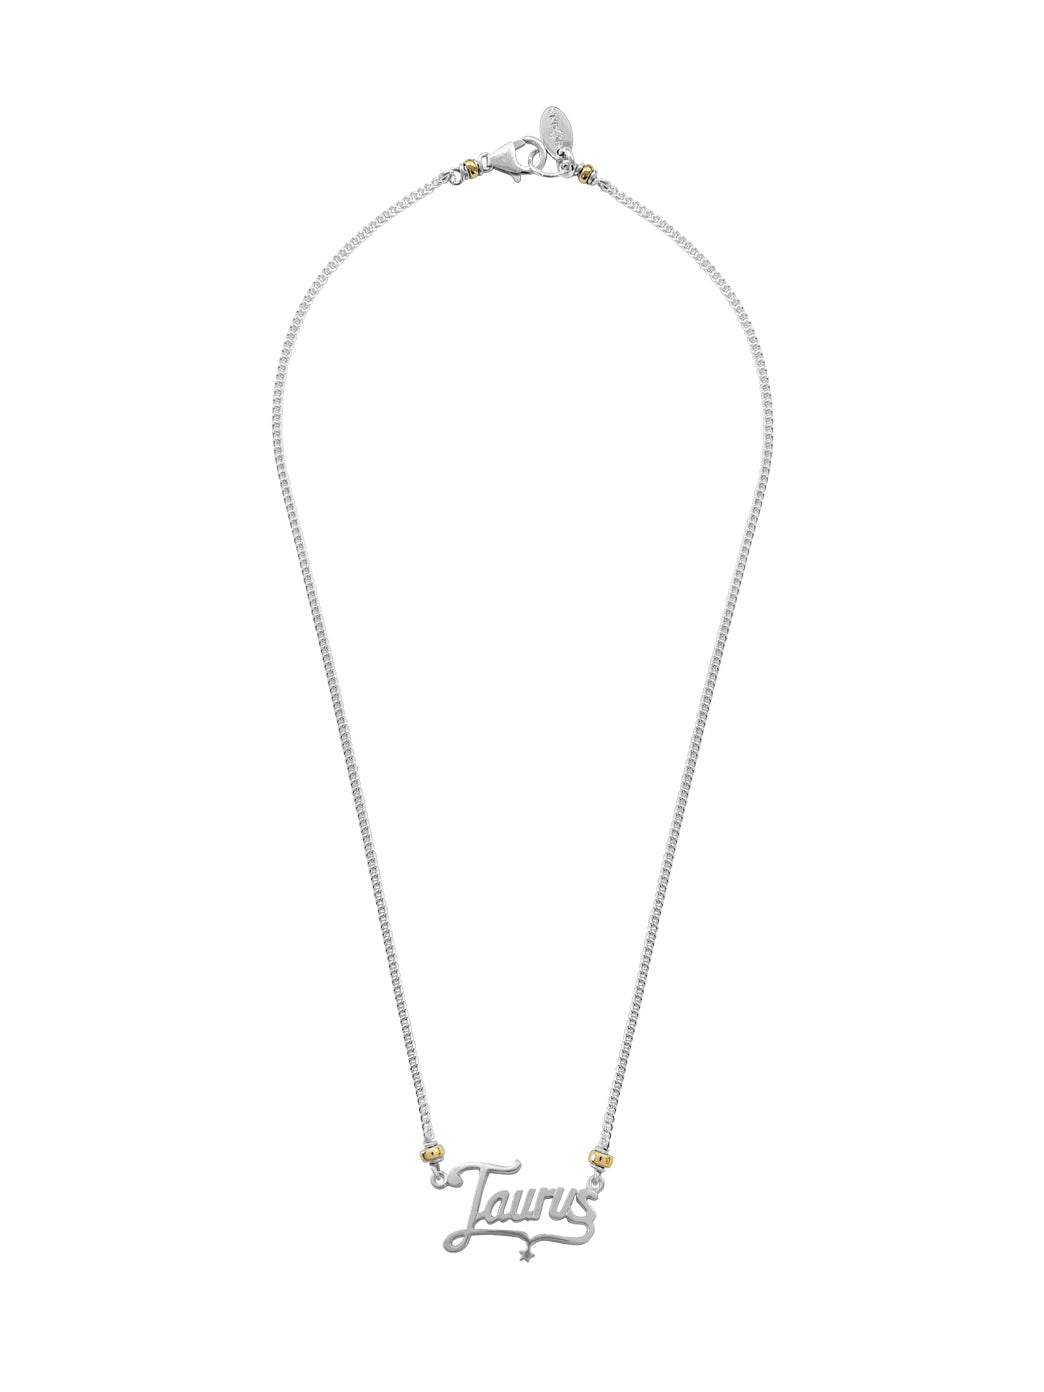 Fiorina Jewellery Silver Zodiac Necklace Taurus